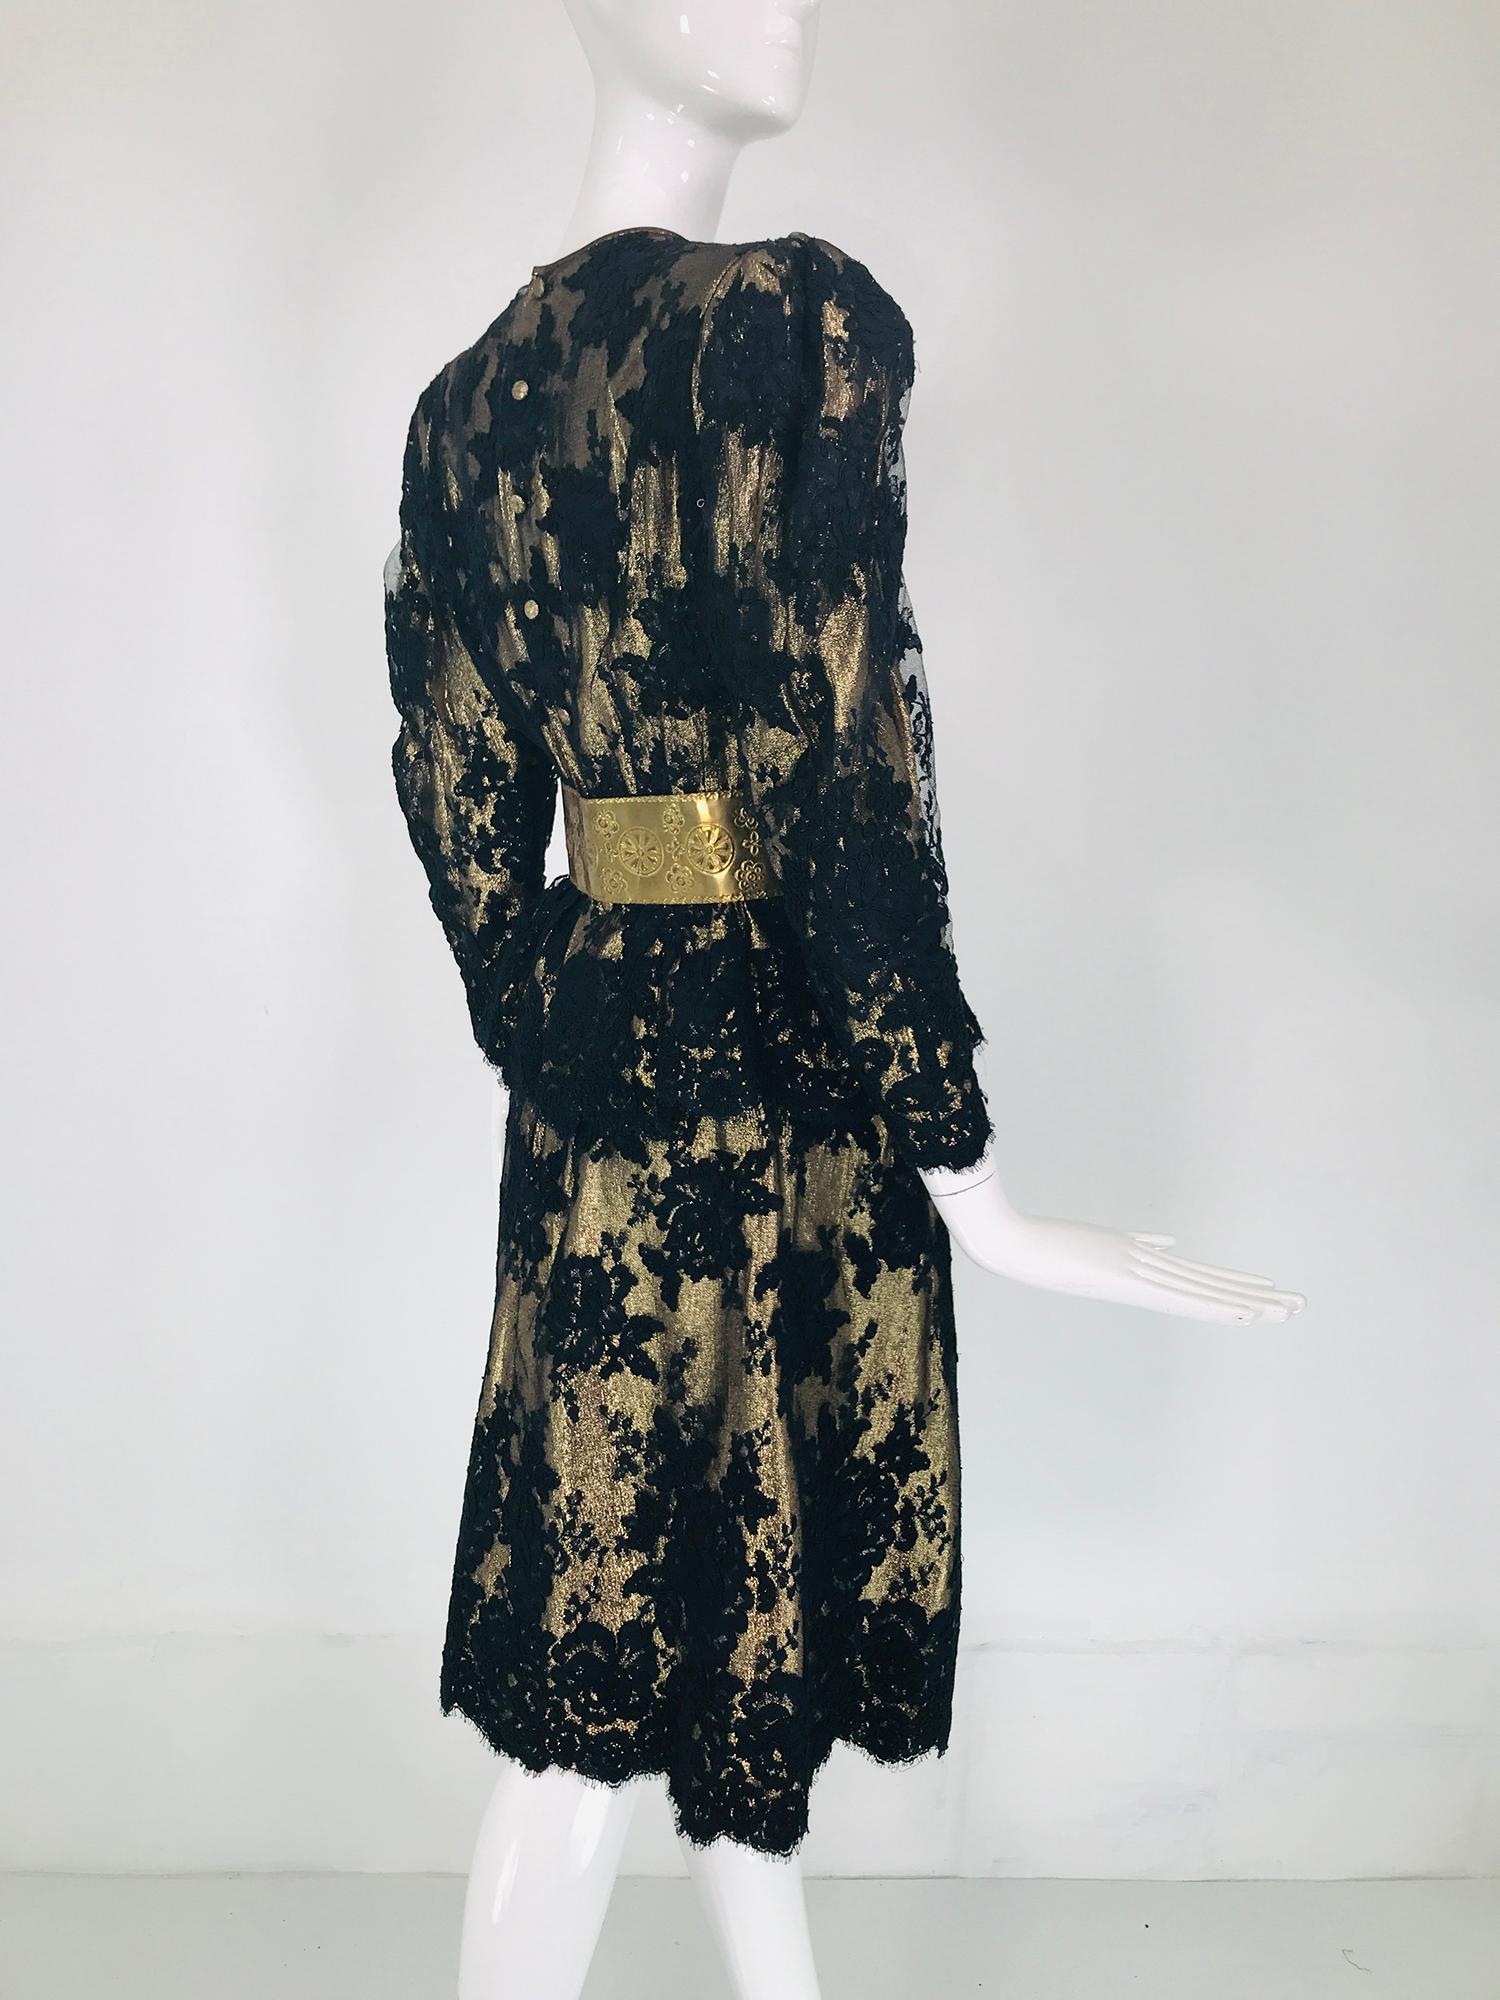 Women's Pauline Trigere Black Guipure Lace over Gold Lame 1980s 2pc Skirt Set  For Sale